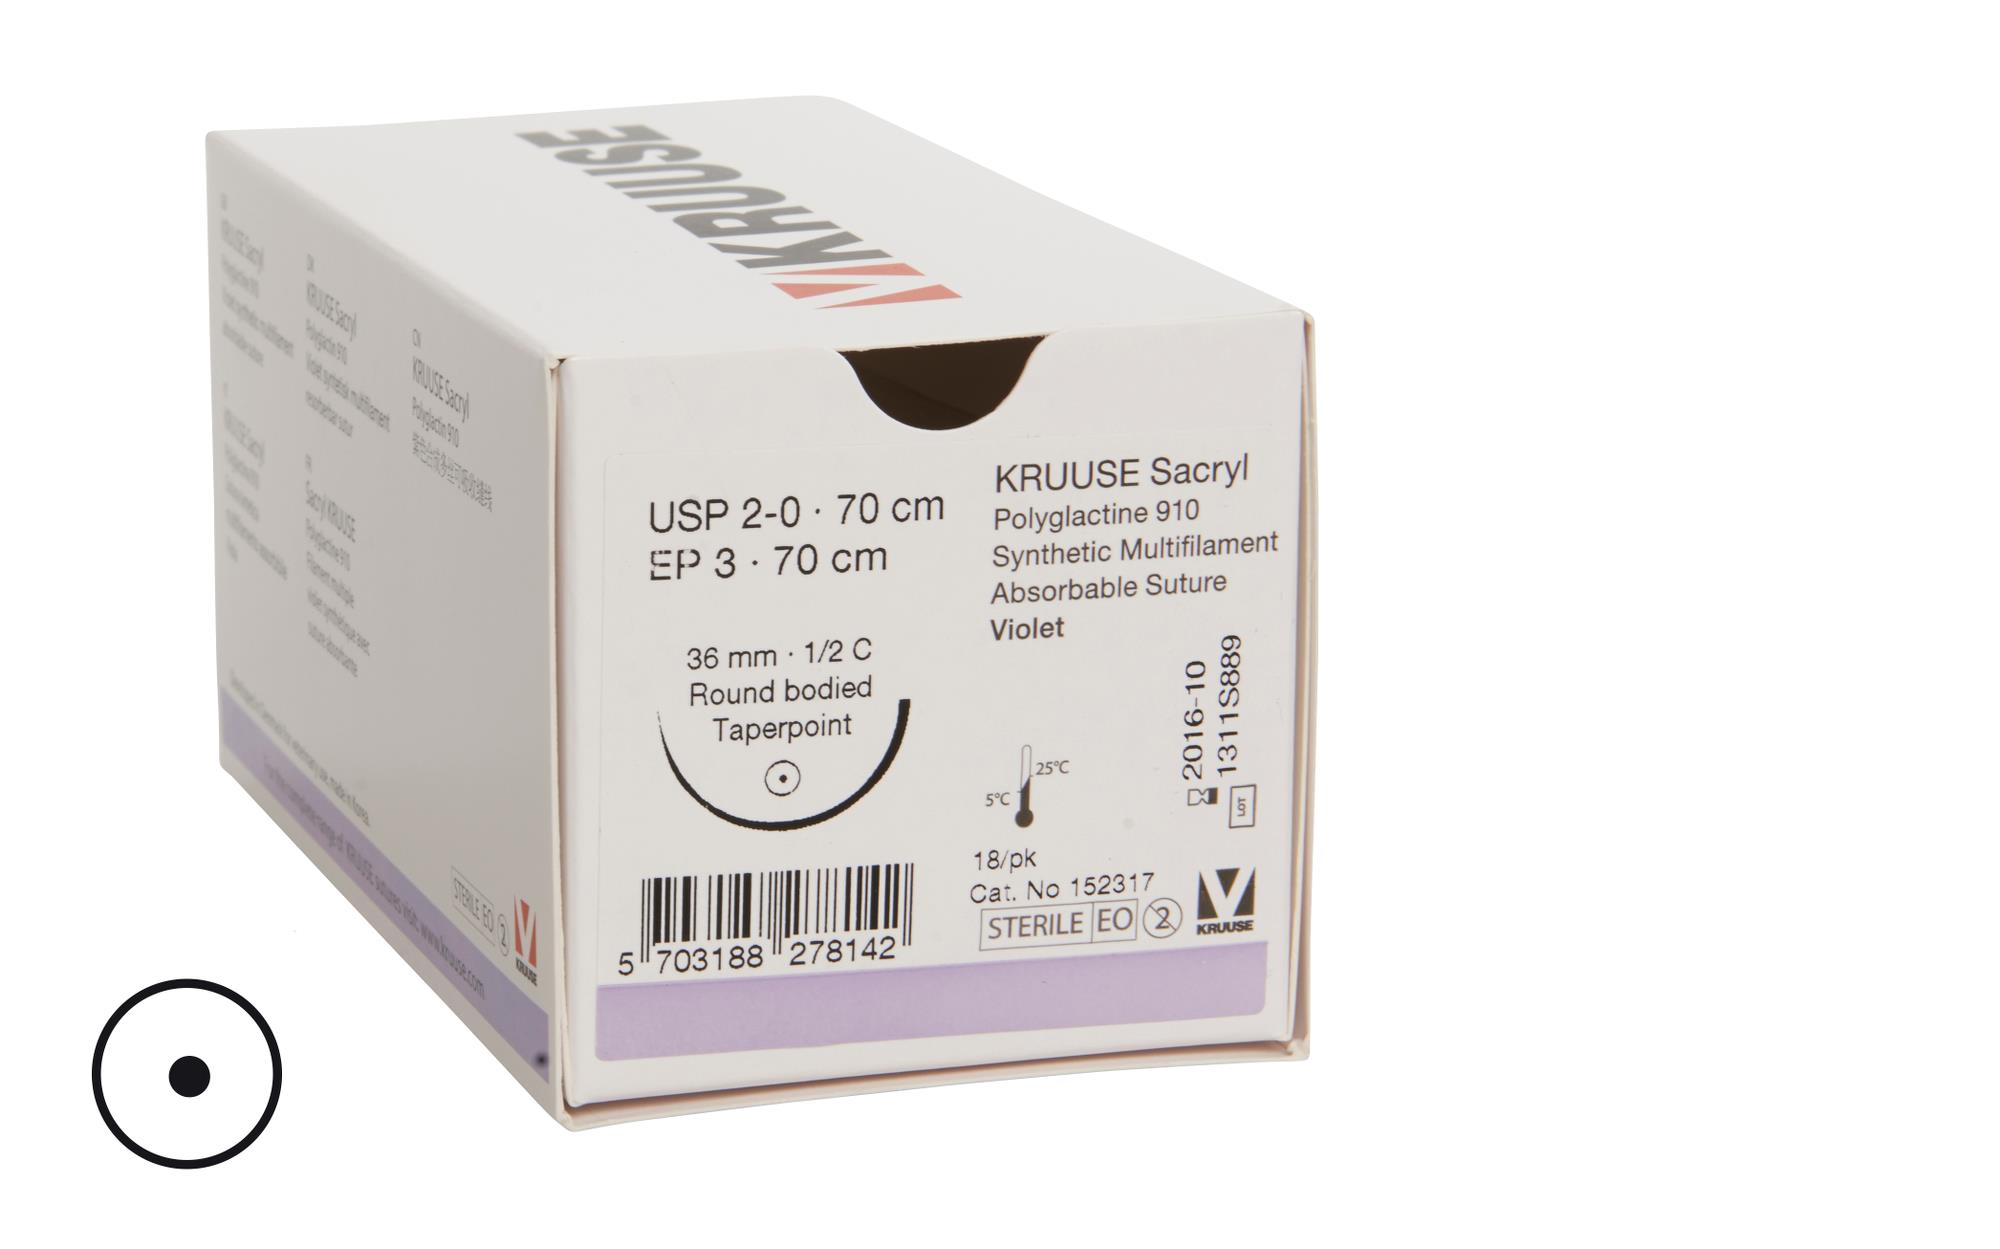 KRUUSE Sacryl suture, USP 2-0, 70 cm, 36 mm, ½C, RB, 18/pk